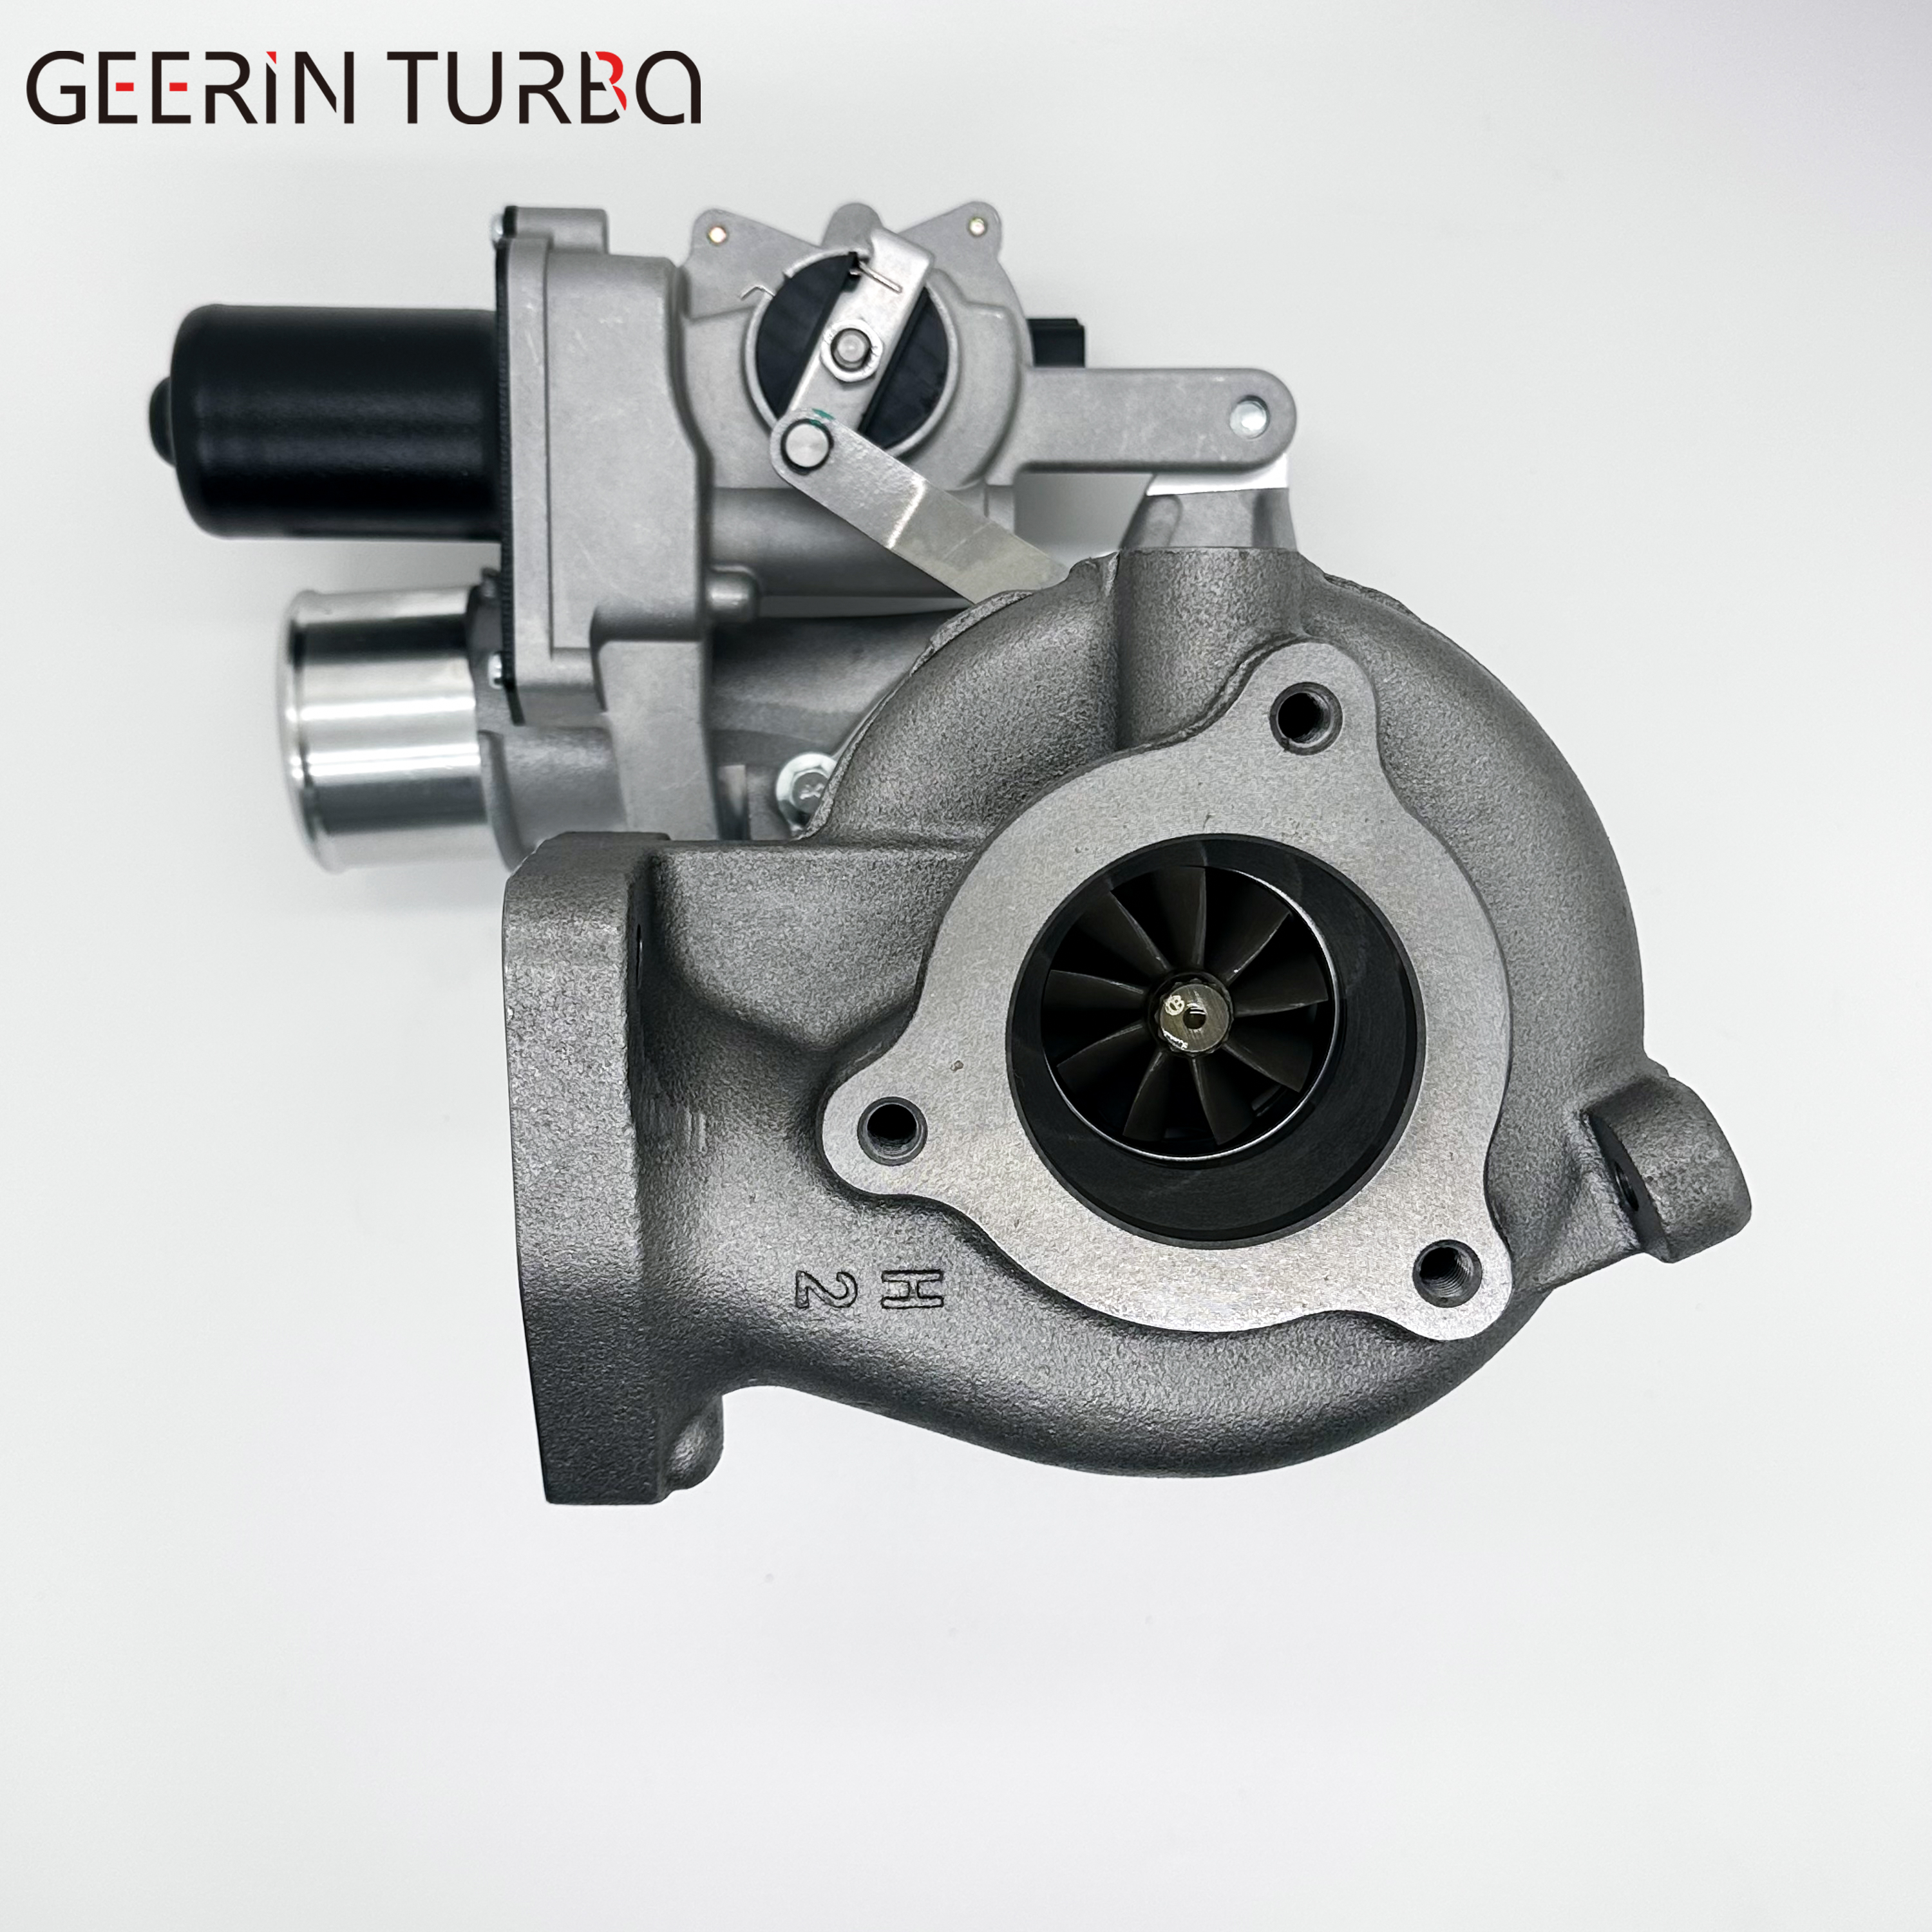 CT16V 17201-30200 17201-OL060 Turbolader Turbocharger For Toyota Factory